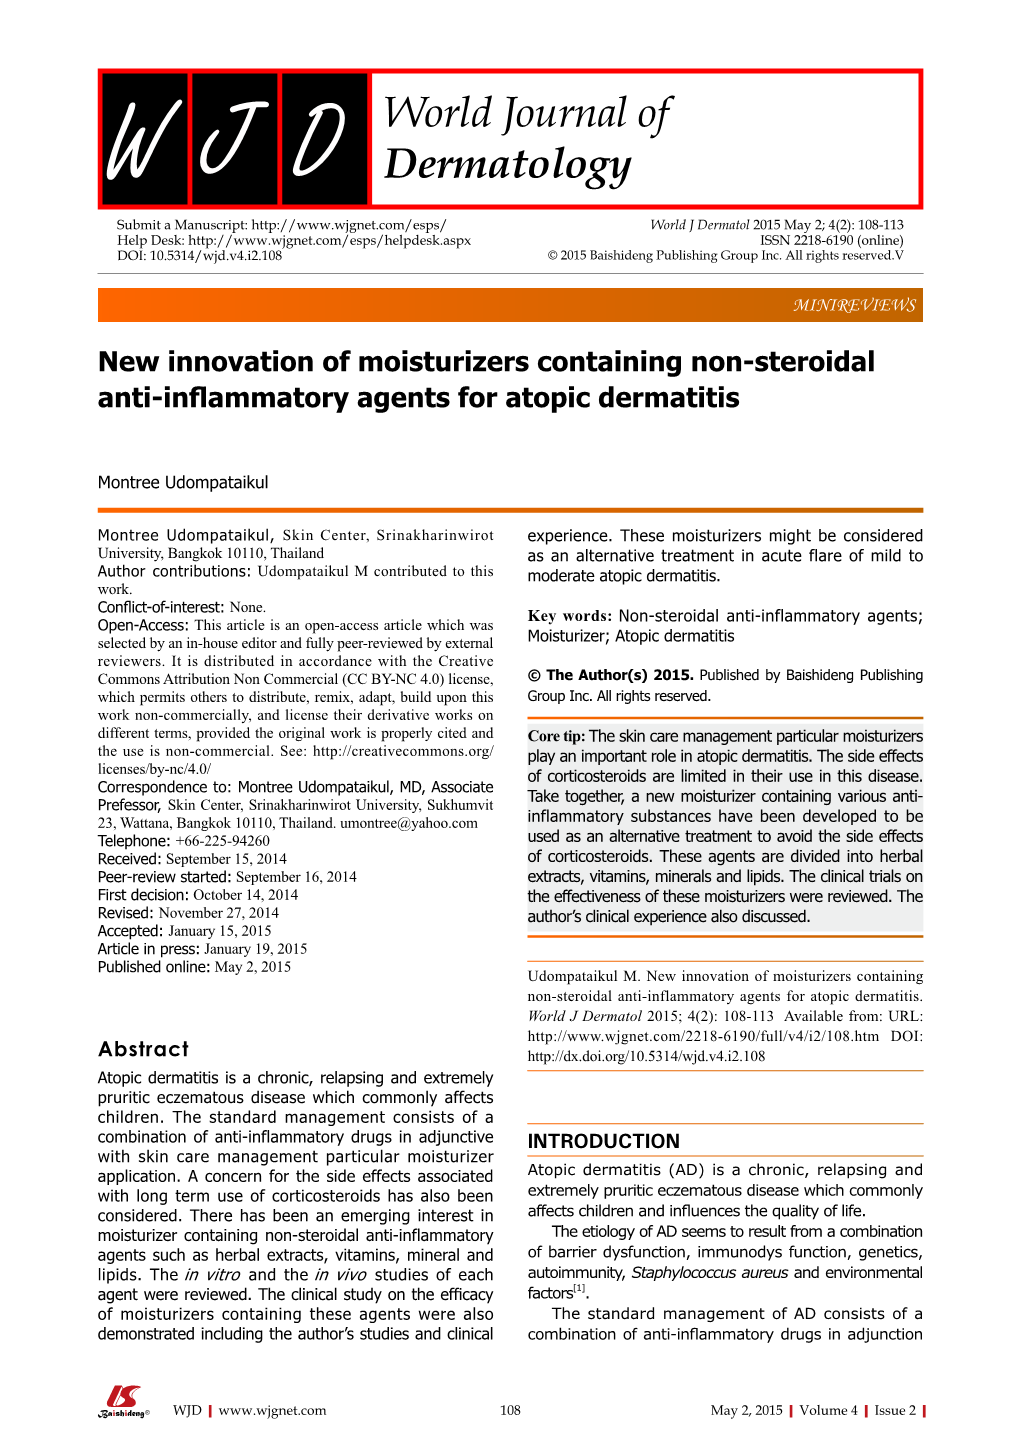 World Journal of Dermatology